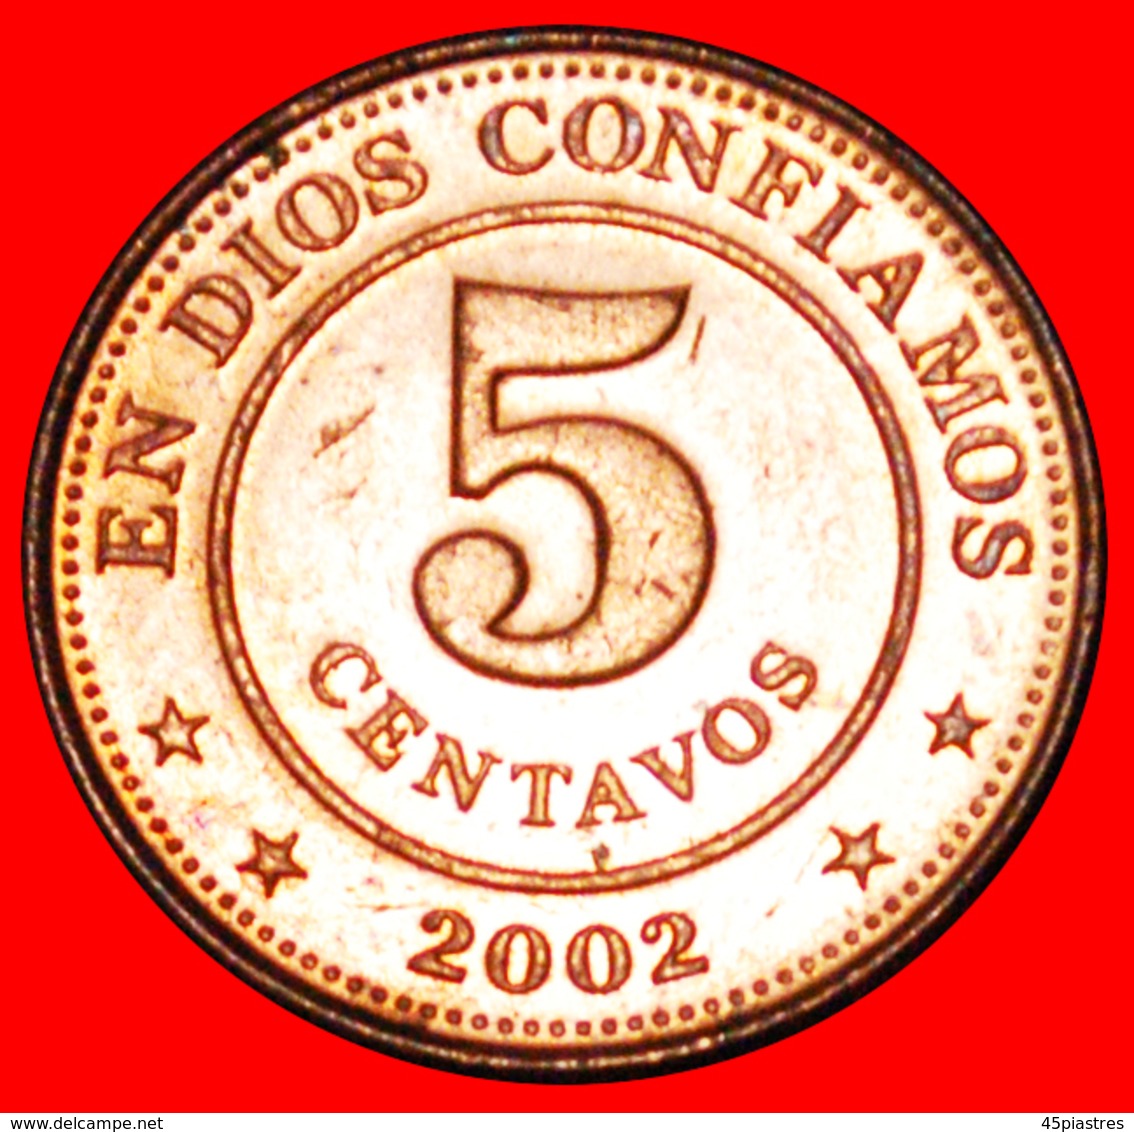 # RAINBOW: NICARAGUA ★ 5 CENTAVOS 2002 MINT LUSTER! LOW START ★ NO RESERVE! - Nicaragua